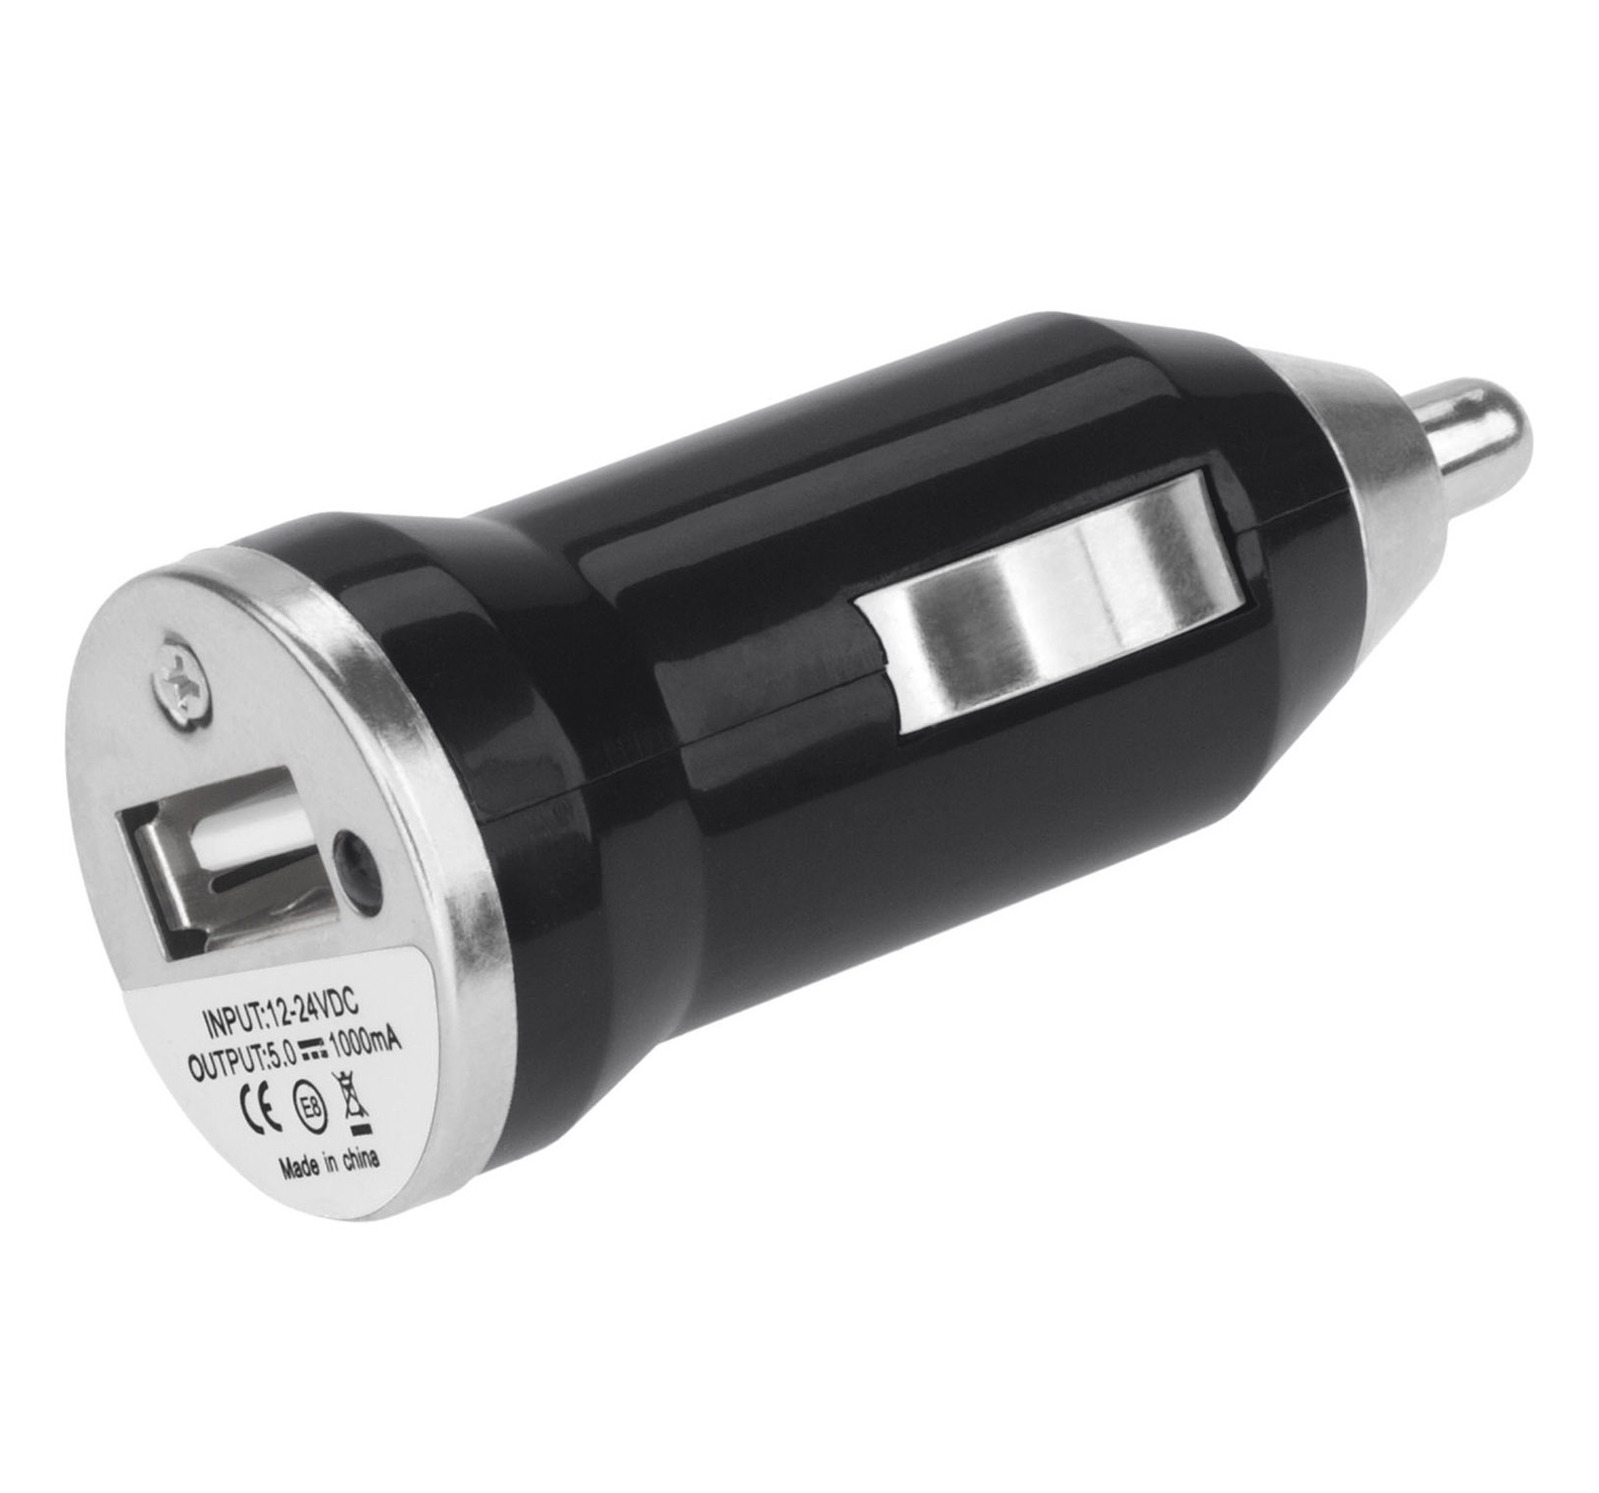 USB Car Charger Cigarette Lighter Converter 